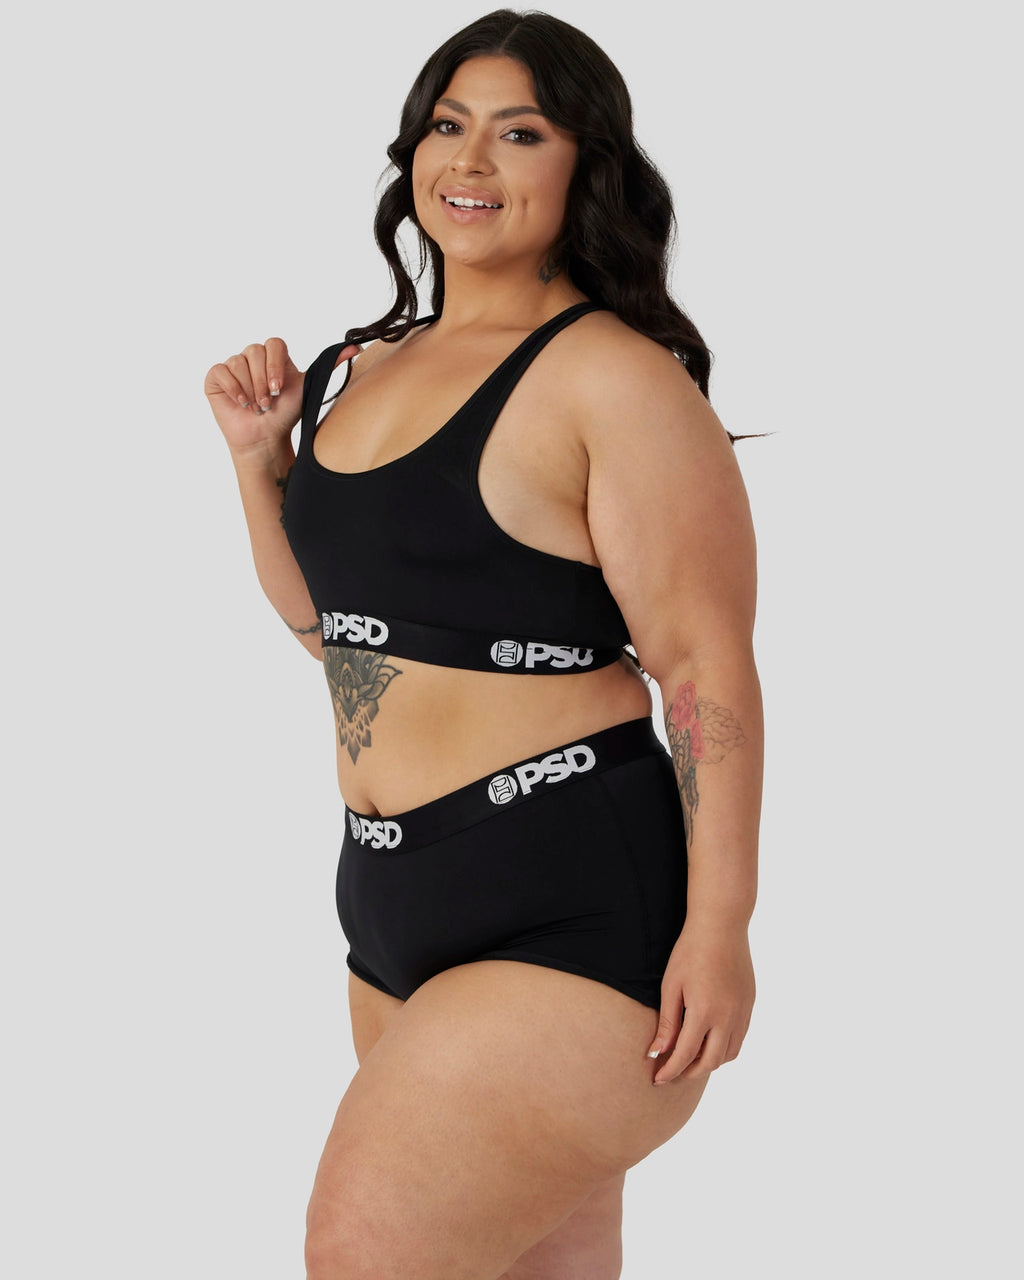 PSD Underwear Women's Sports Bra - Trojan, Elastic Band, Stretch Fabric